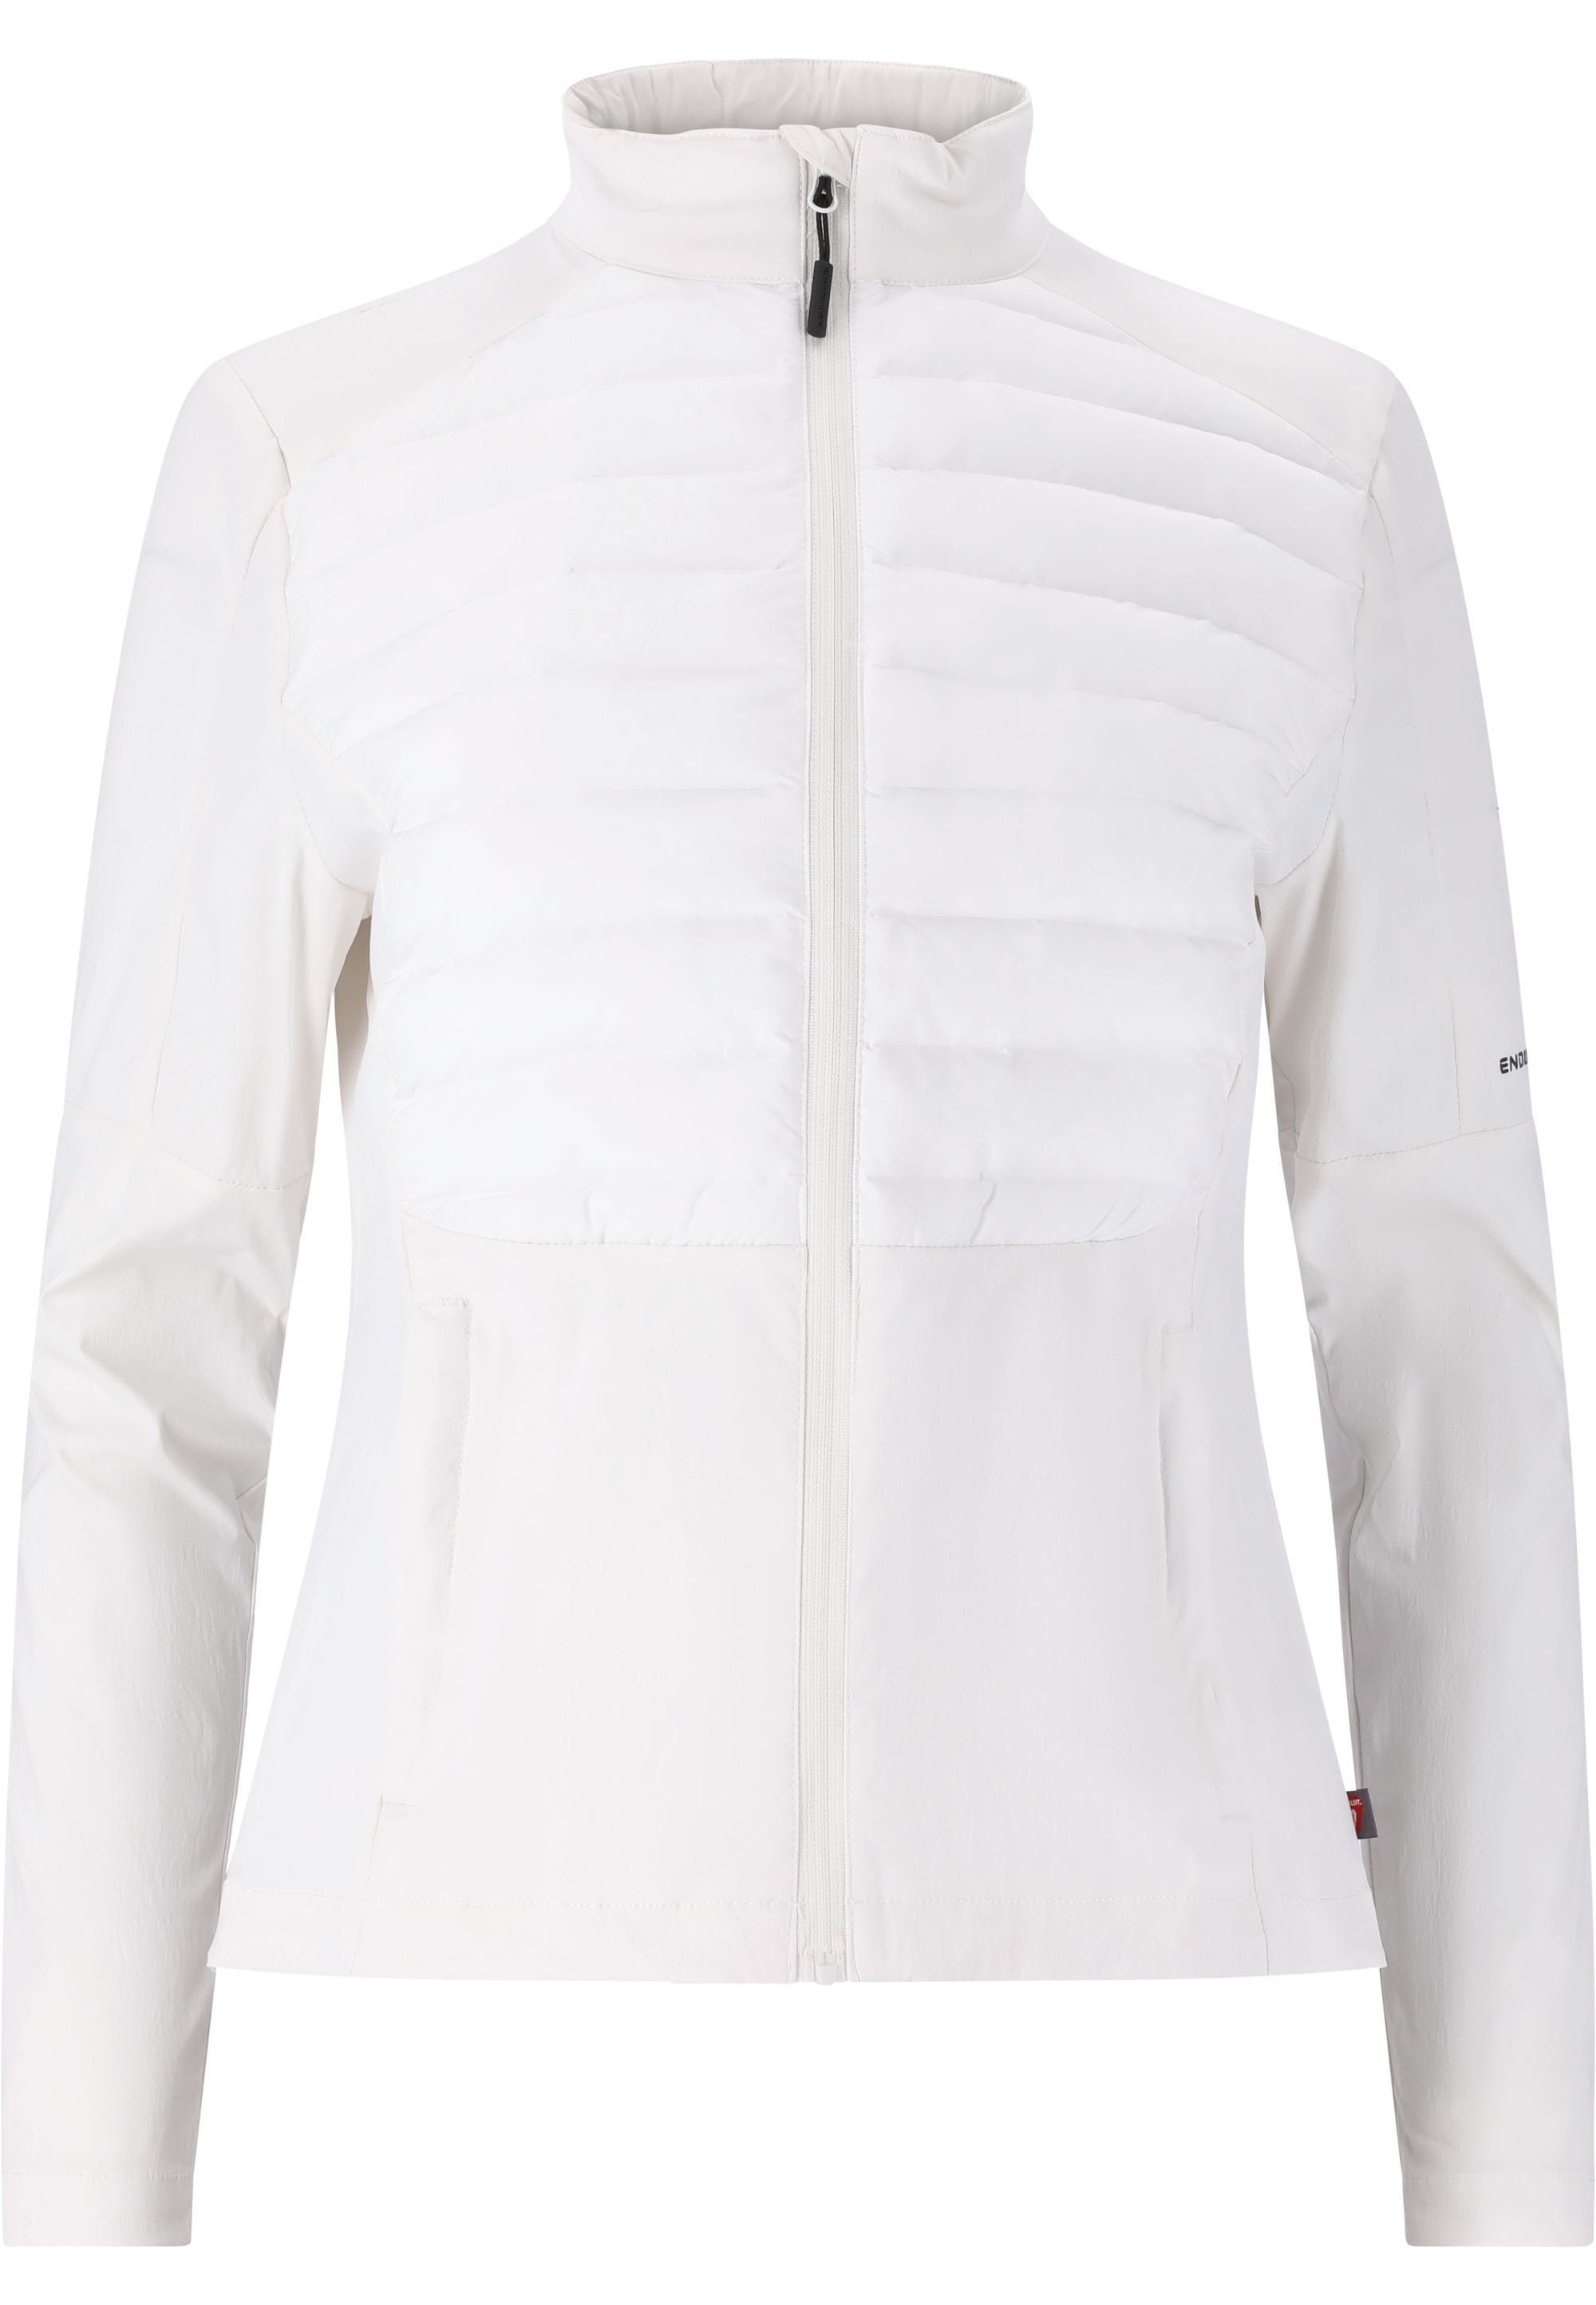 Спортивная куртка Endurance Beistyla, цвет 1002 White спортивная куртка endurance telly цвет 1002 white